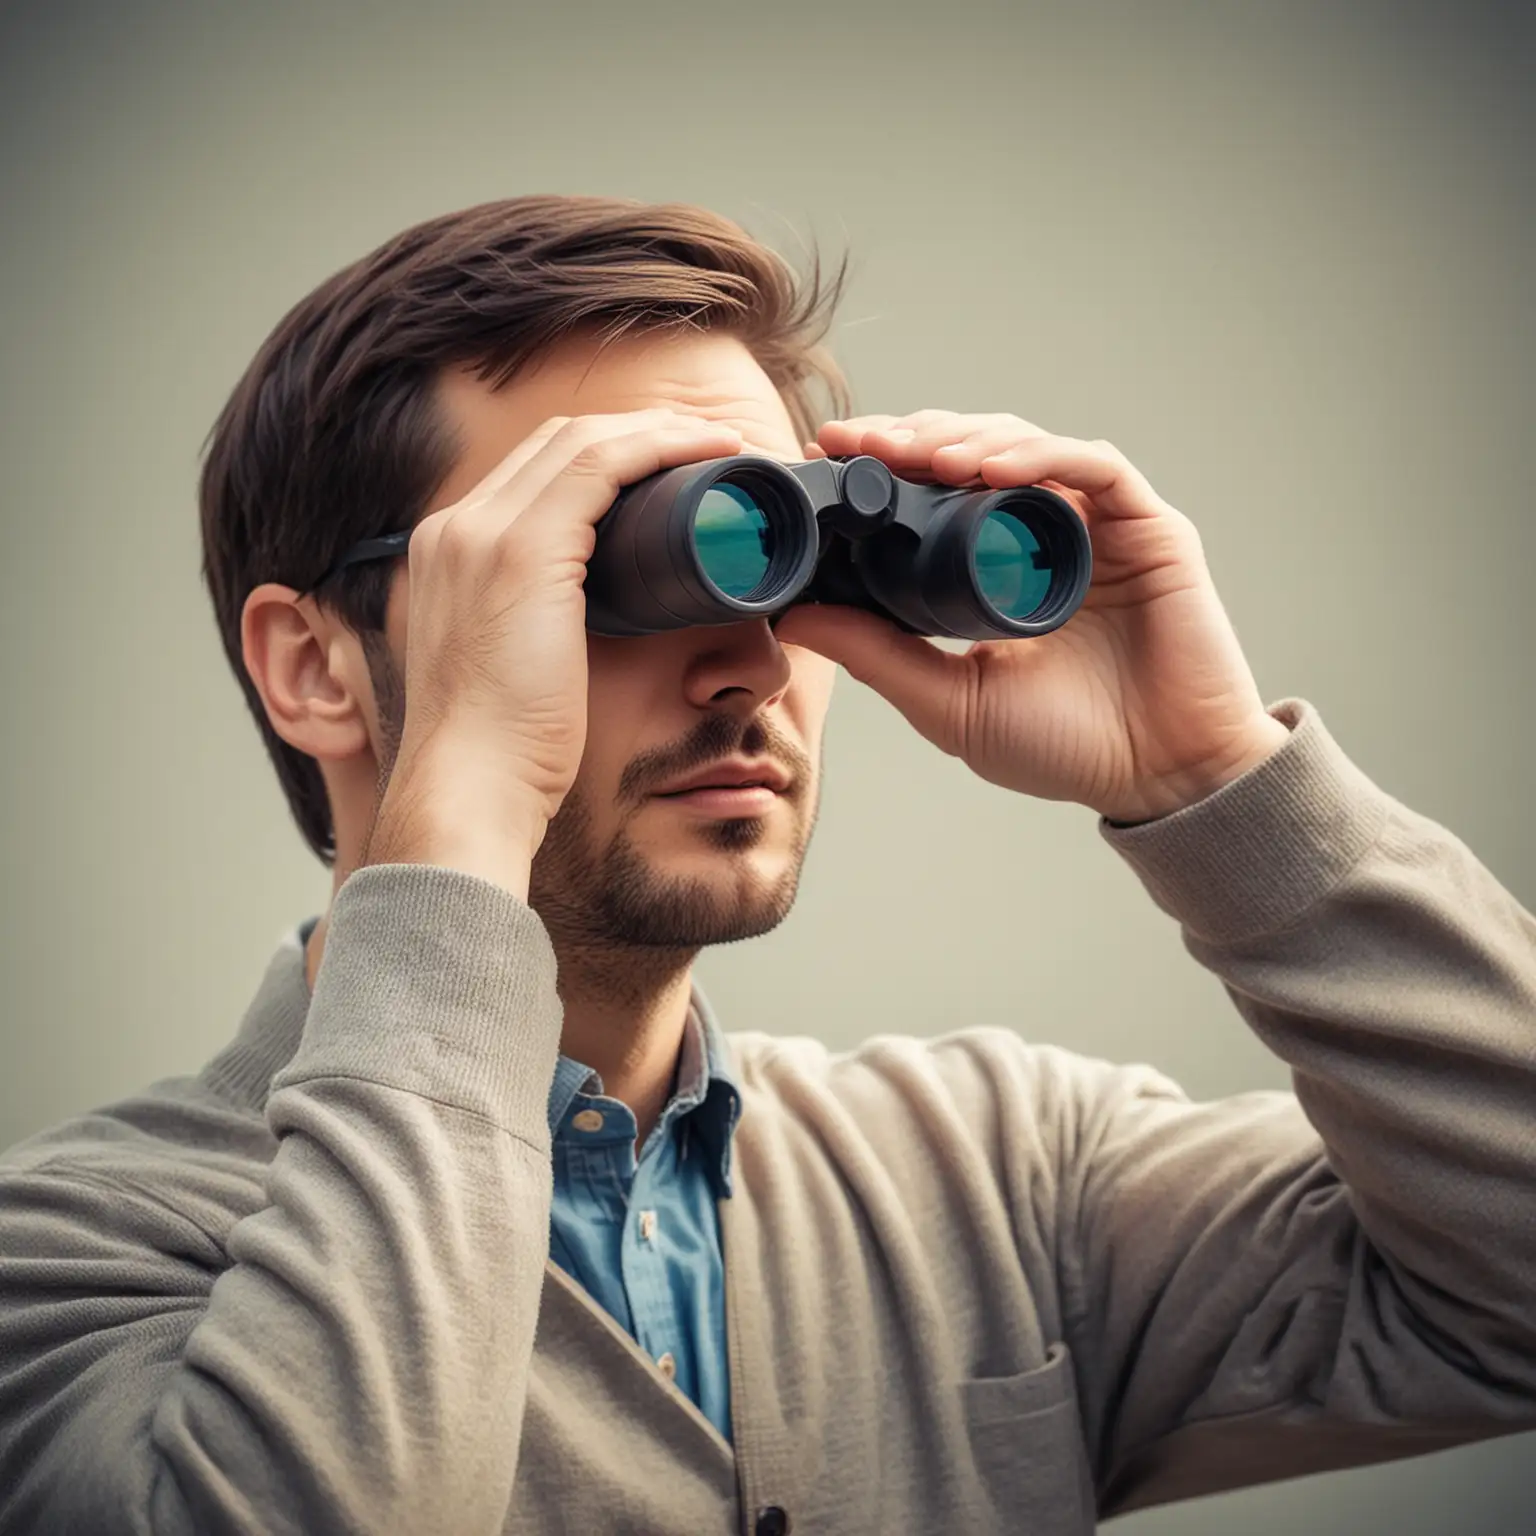 A man looking through binocular